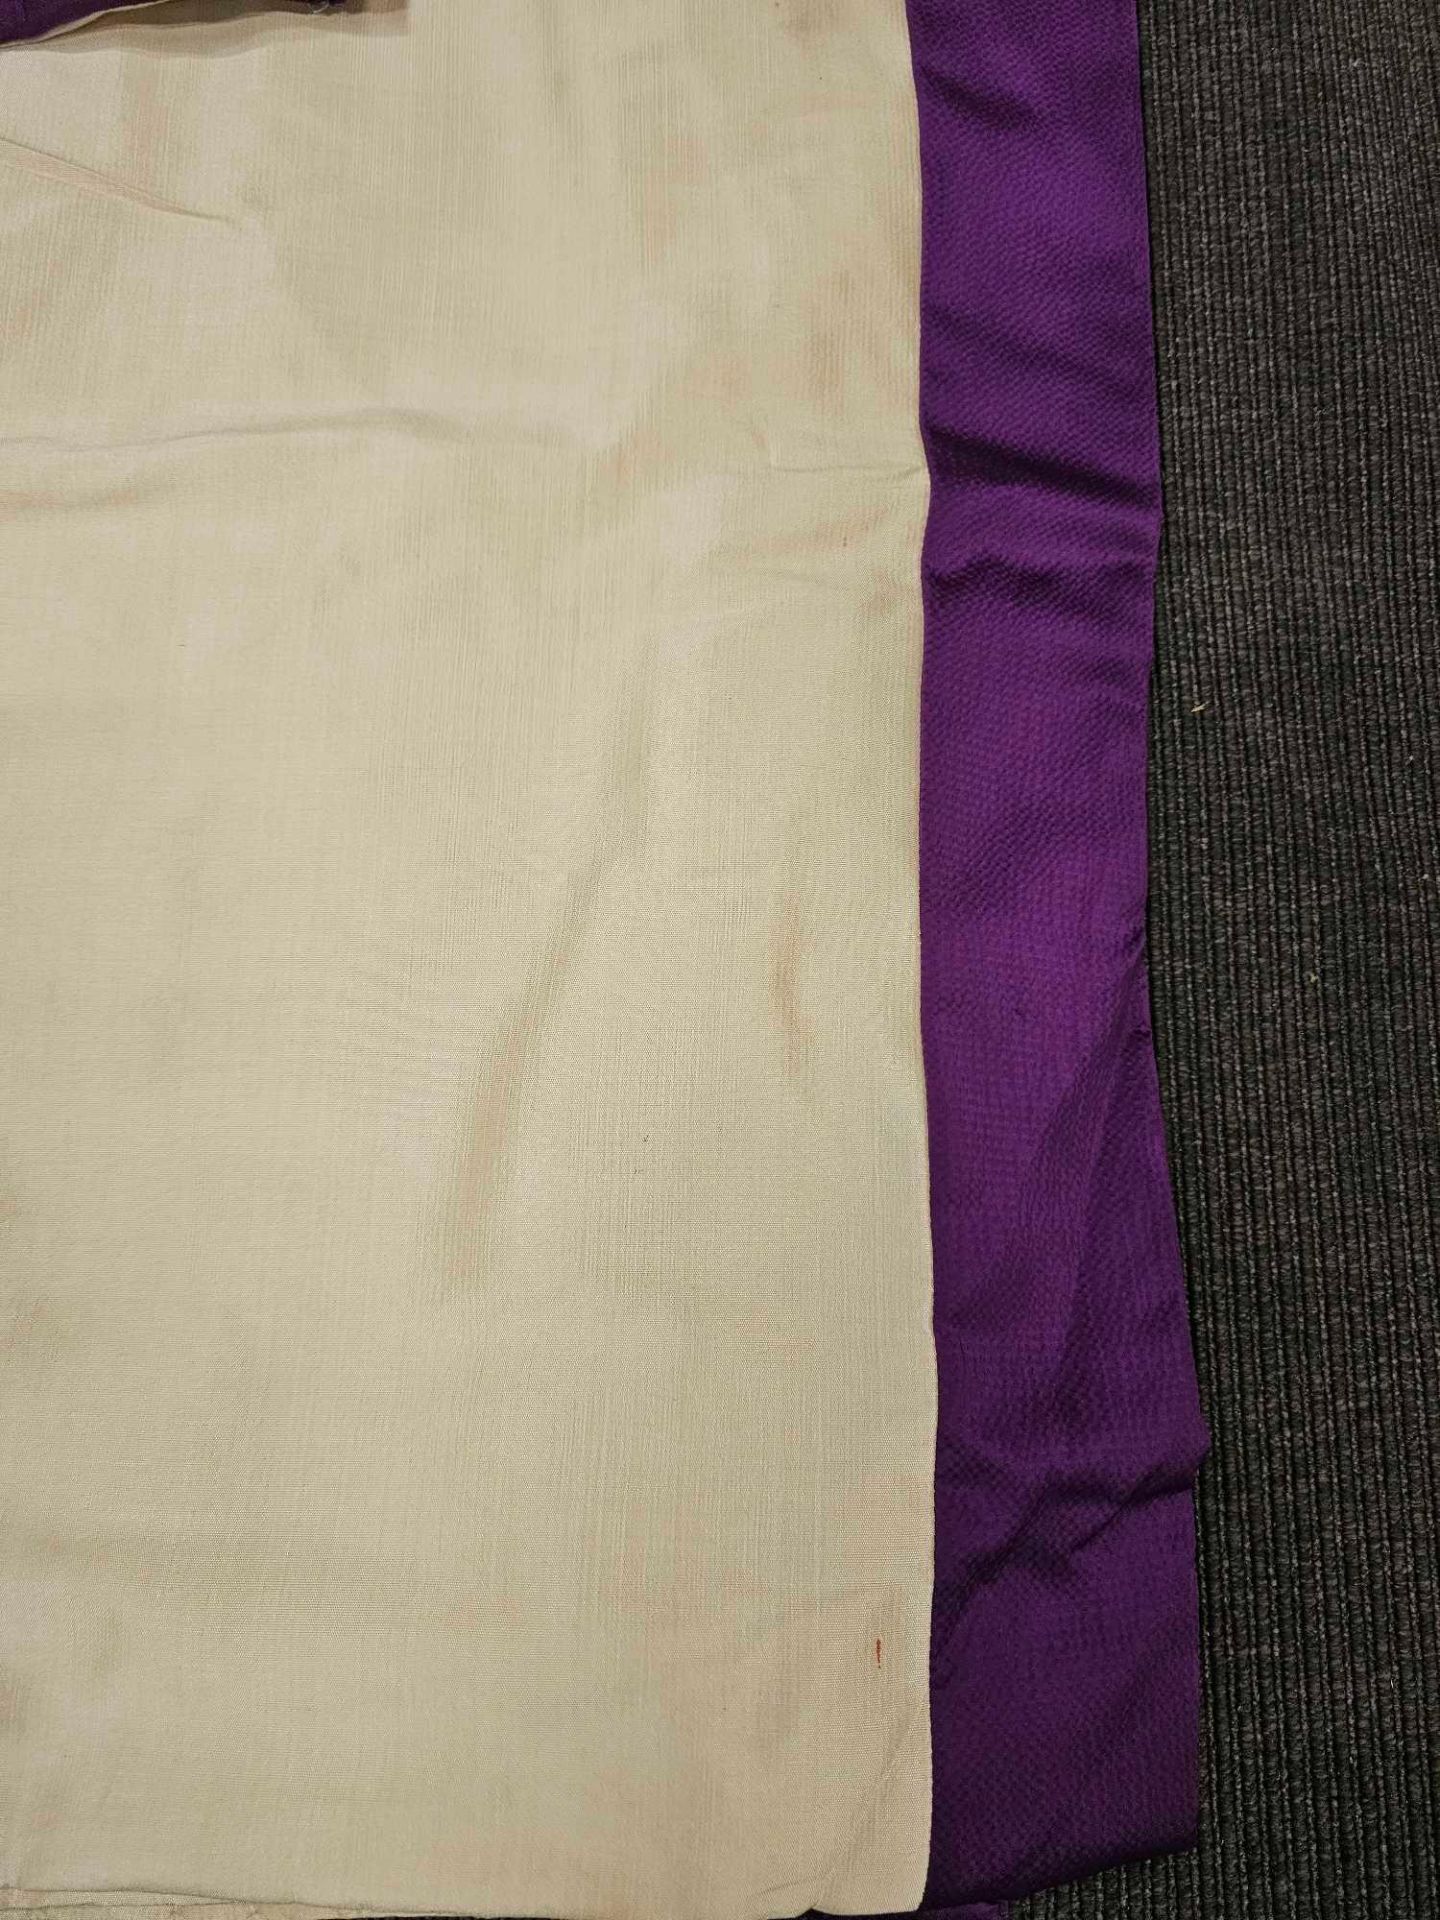 A Pair Silk Drapes Cream Purple Striped Edge Tie Backs And Canopy Size -cm 224 x 238 Ref Dorch 70 - Image 3 of 4